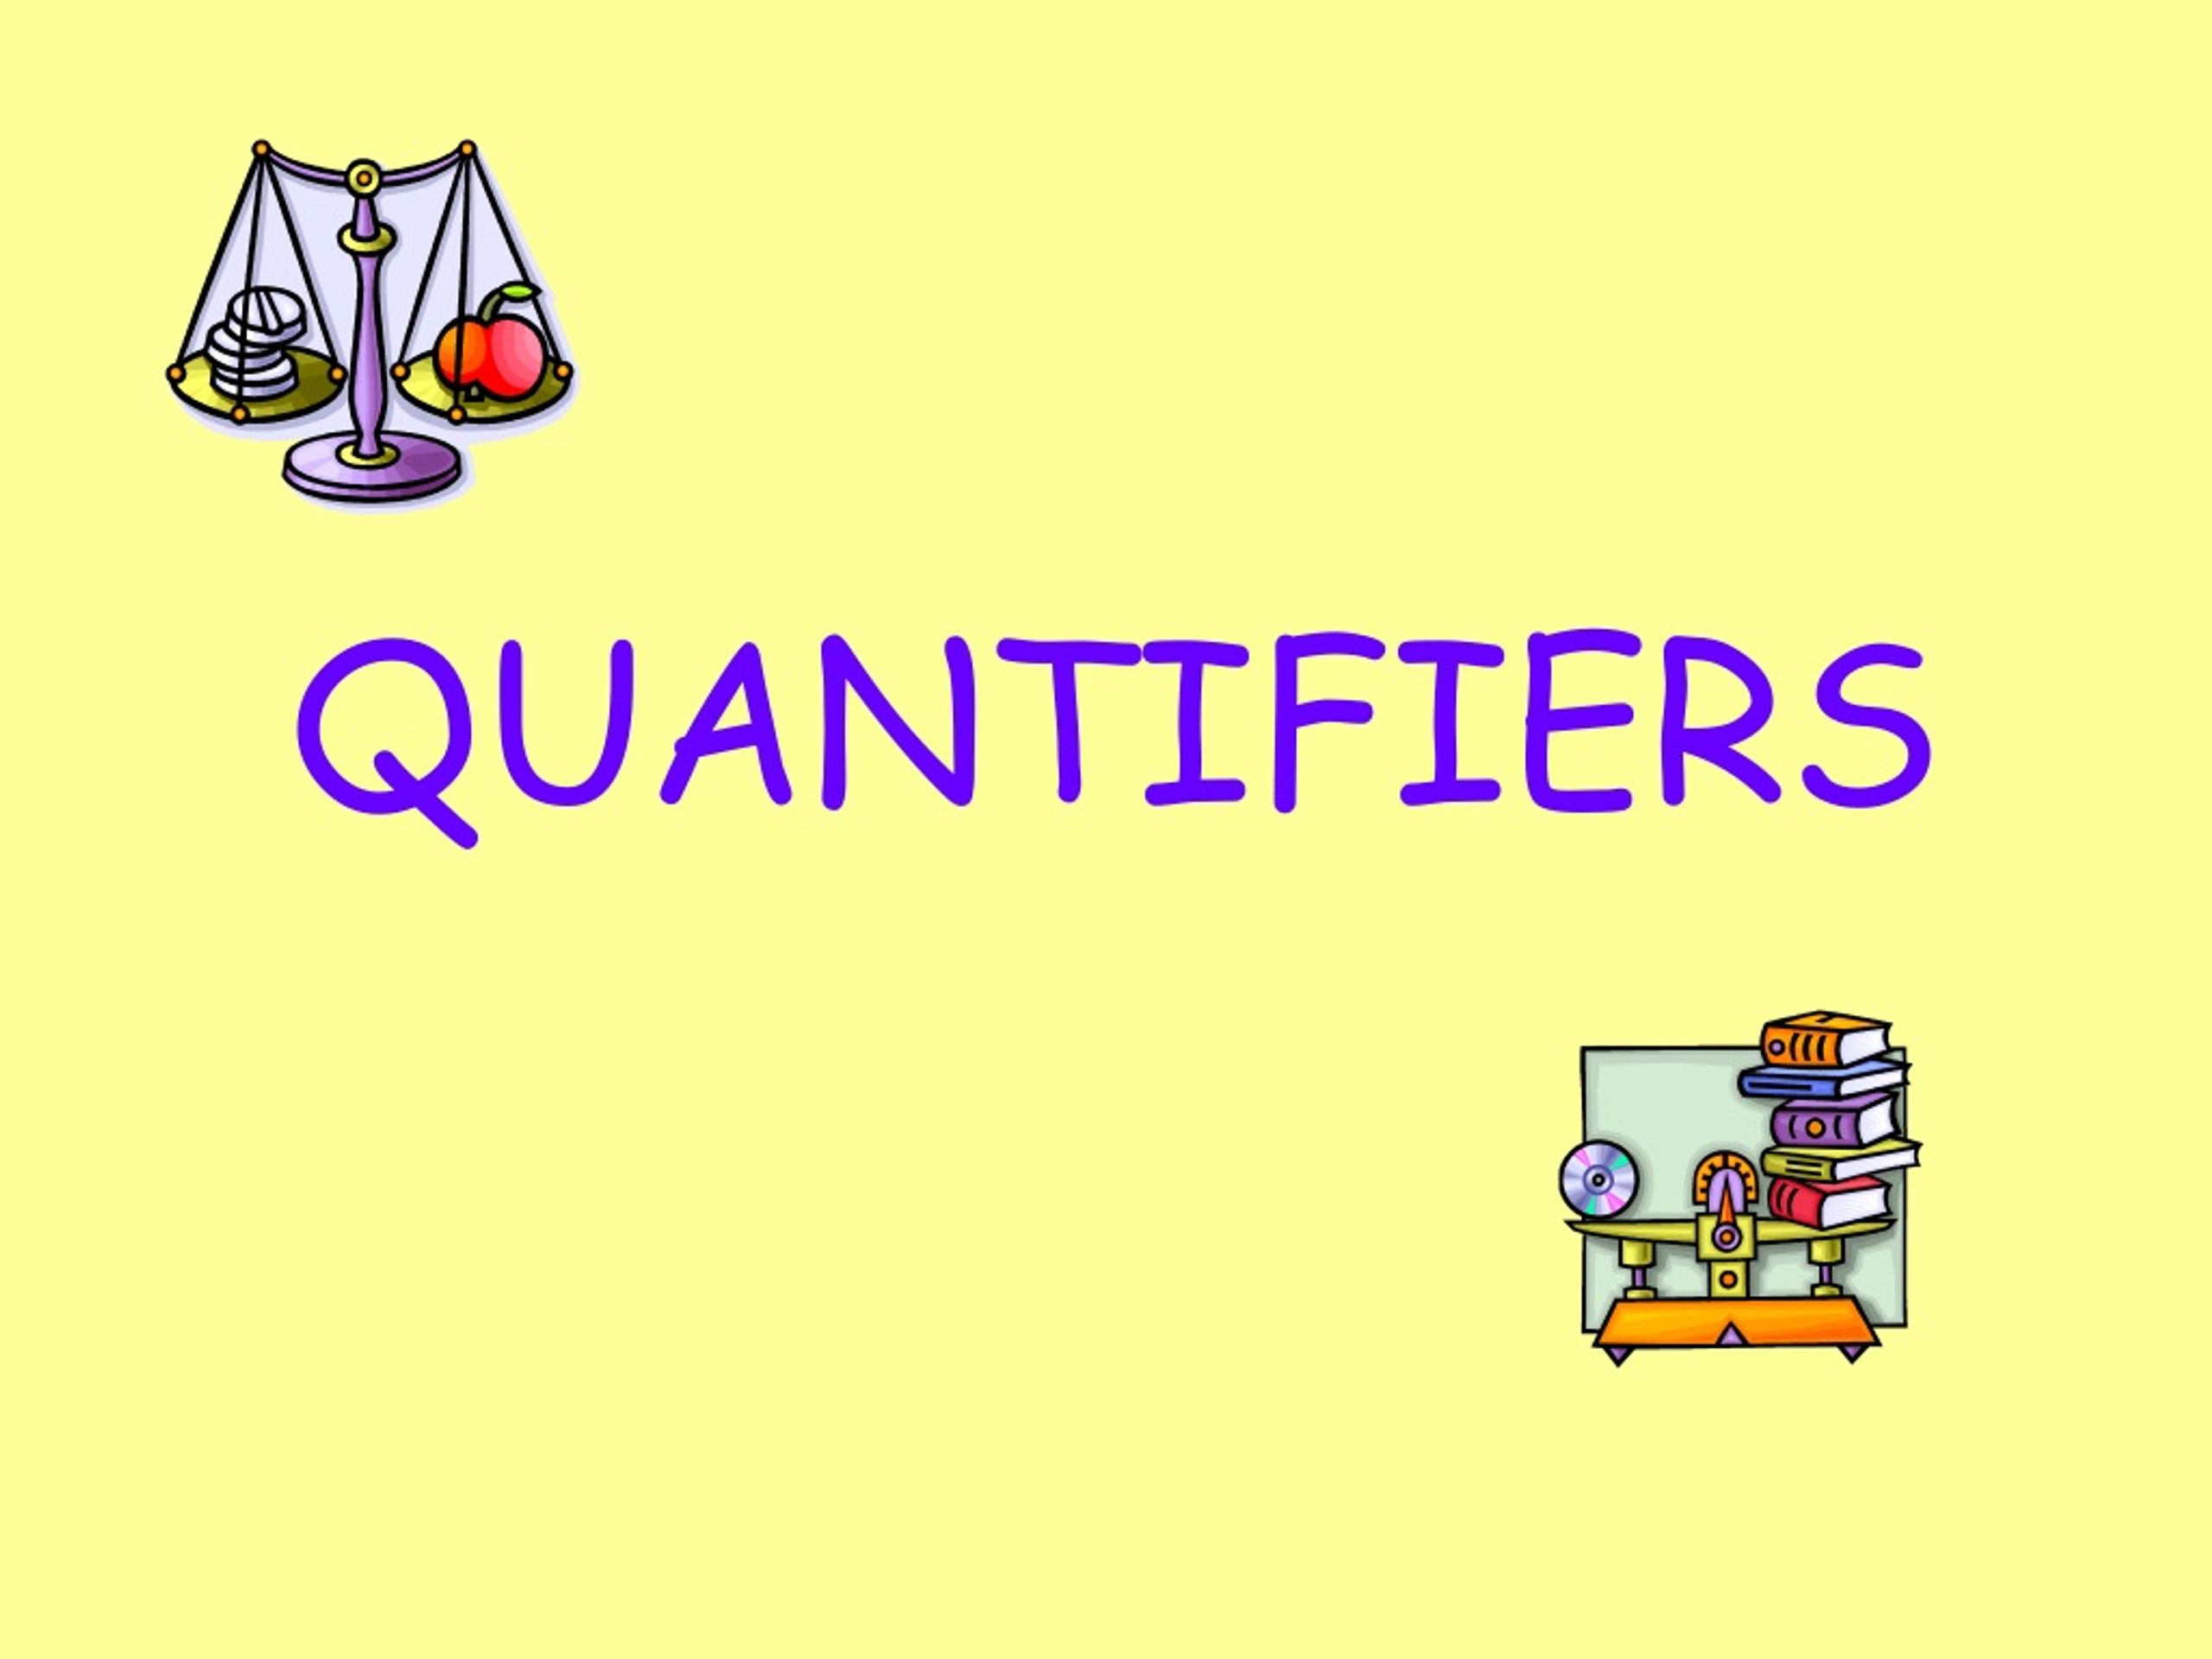 quantifiers powerpoint presentation